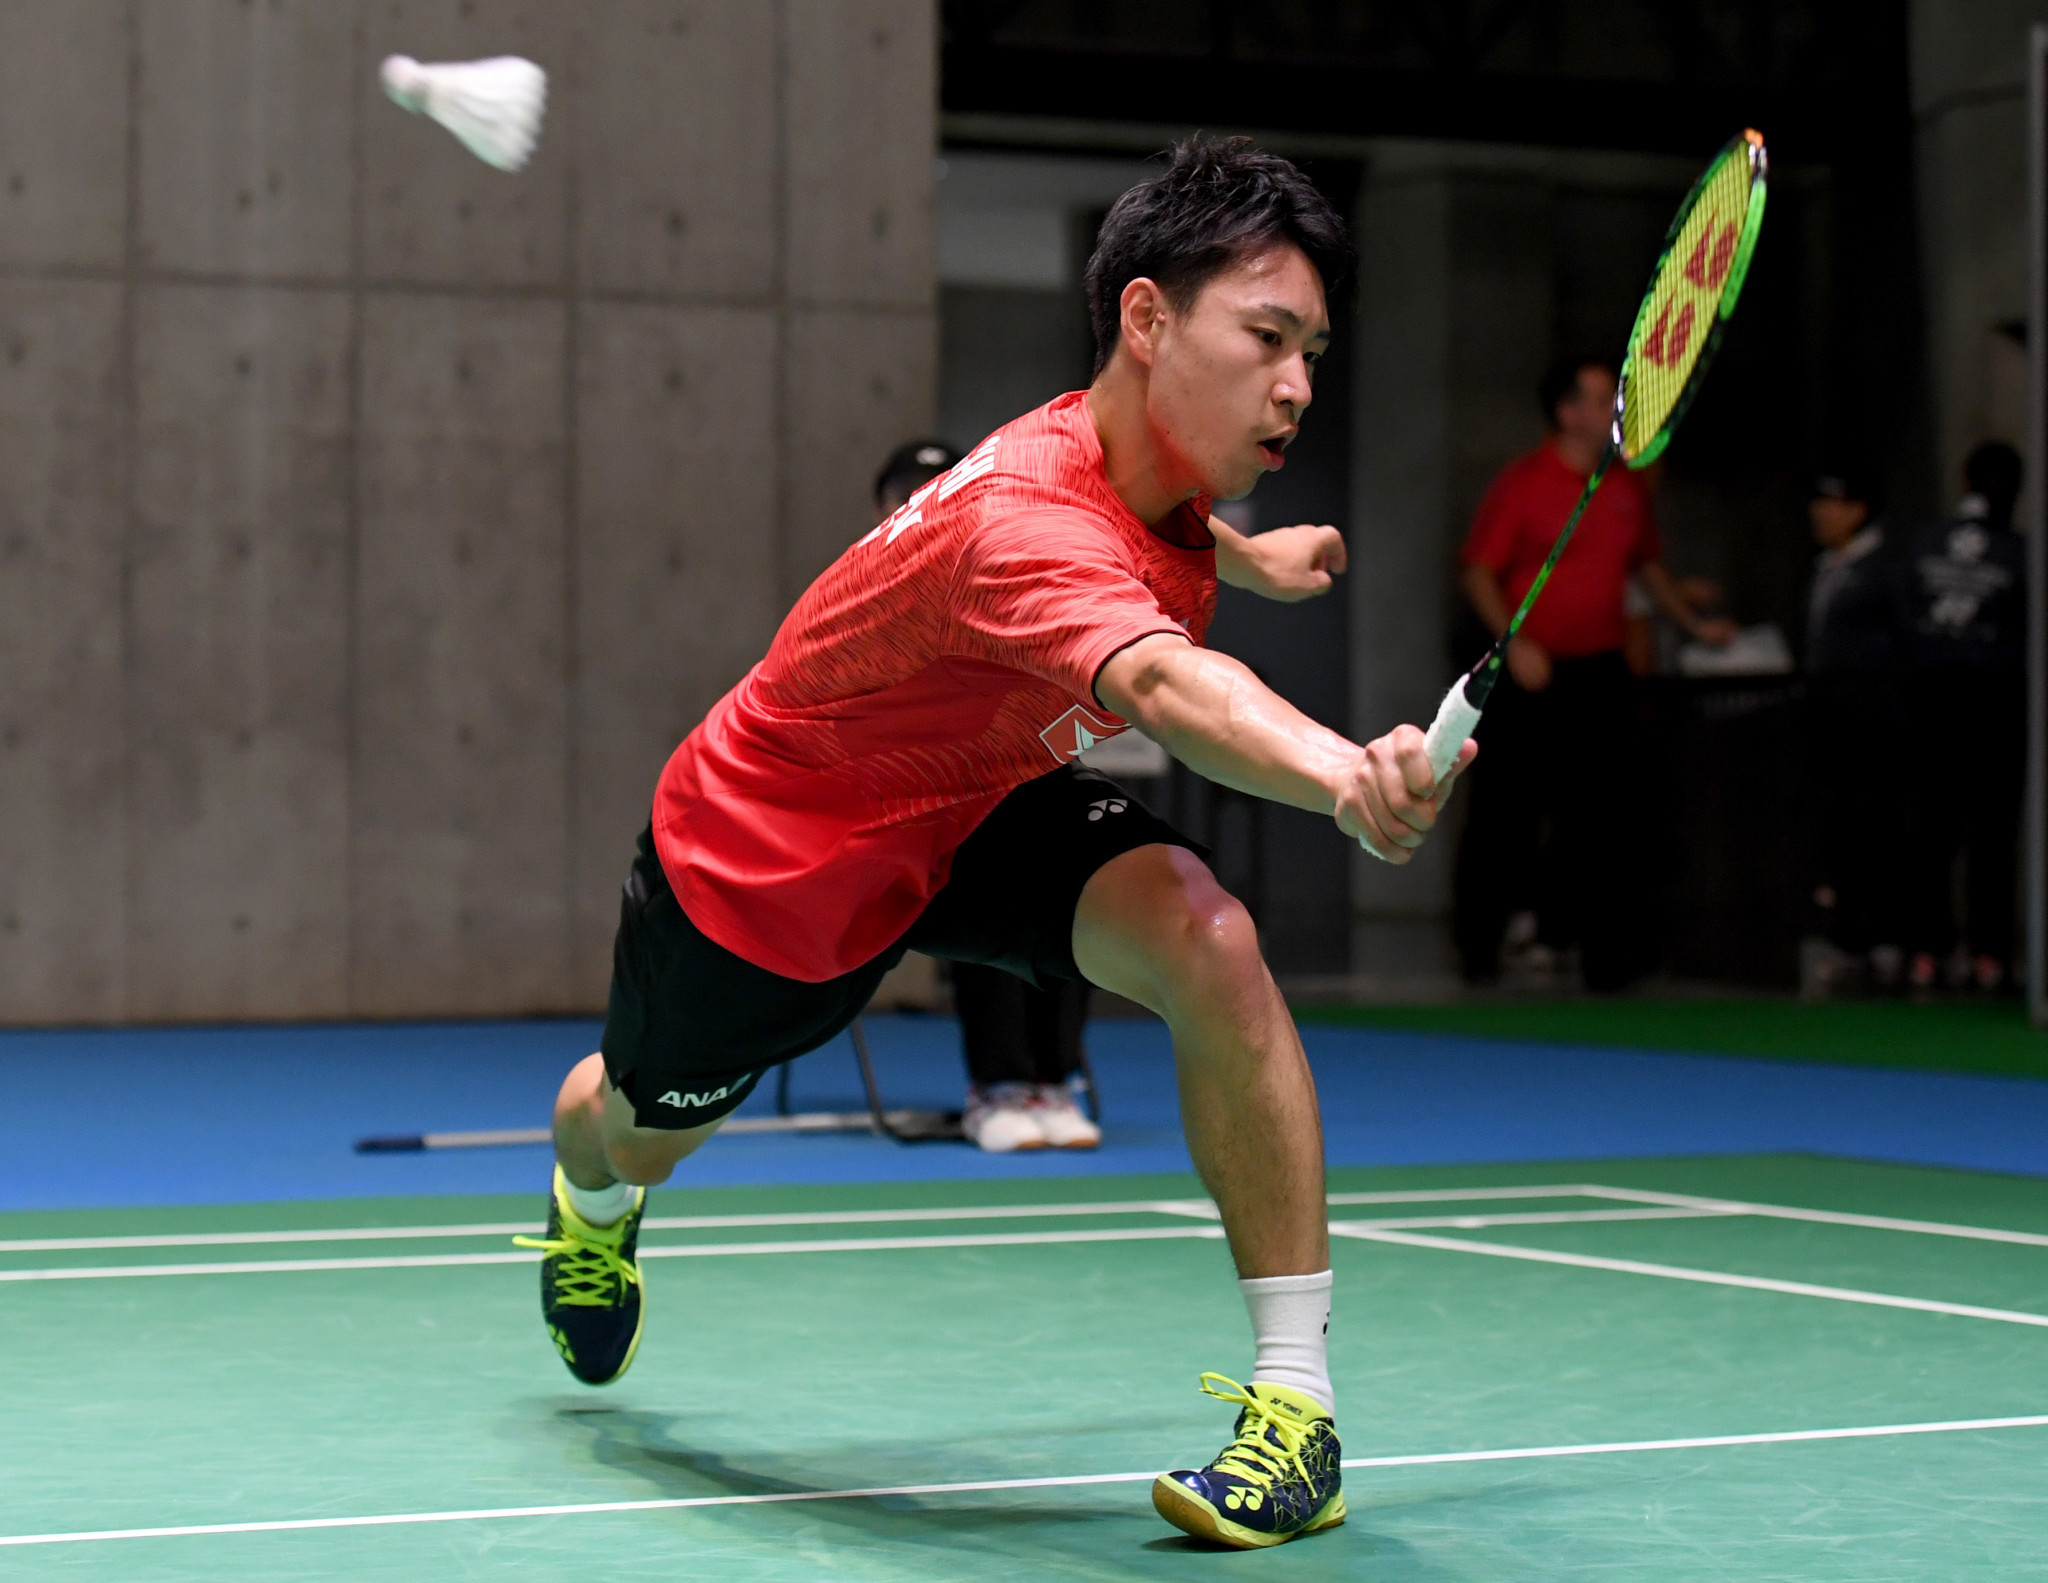 Yu Igarashi, pictured, upset favourite Tzu Wei Wang to reach the men's singles final ©Getty Images